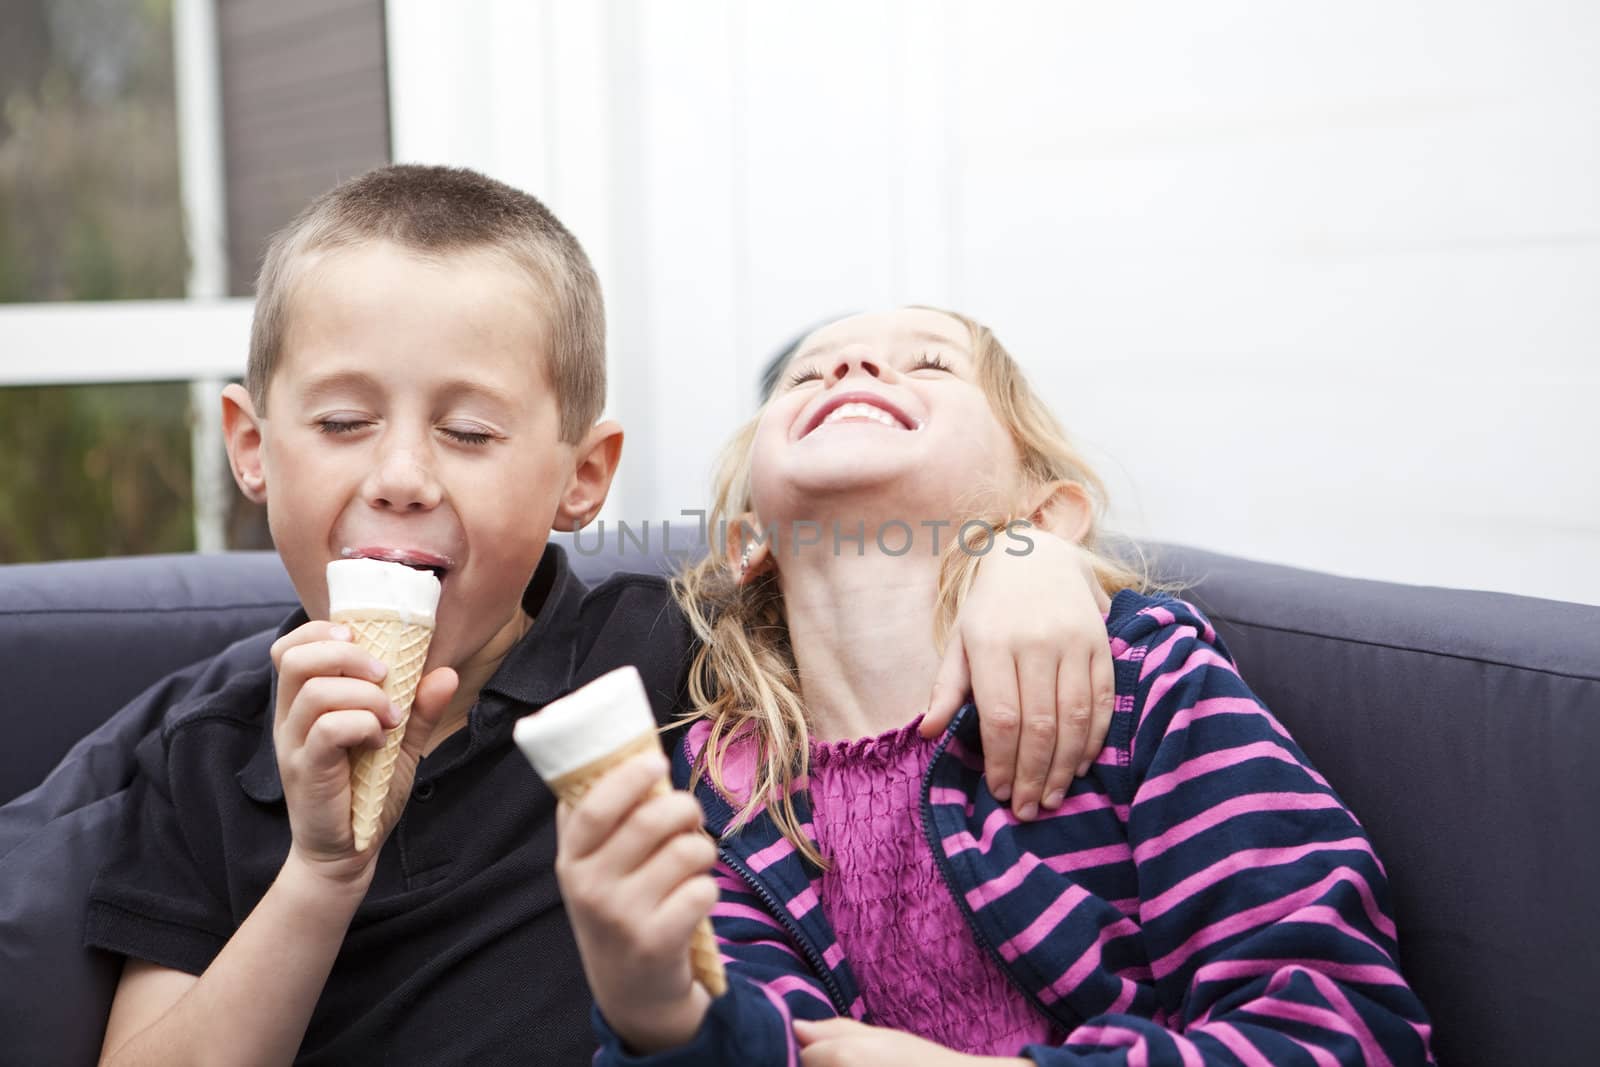 Eating Ice-cream by gemenacom